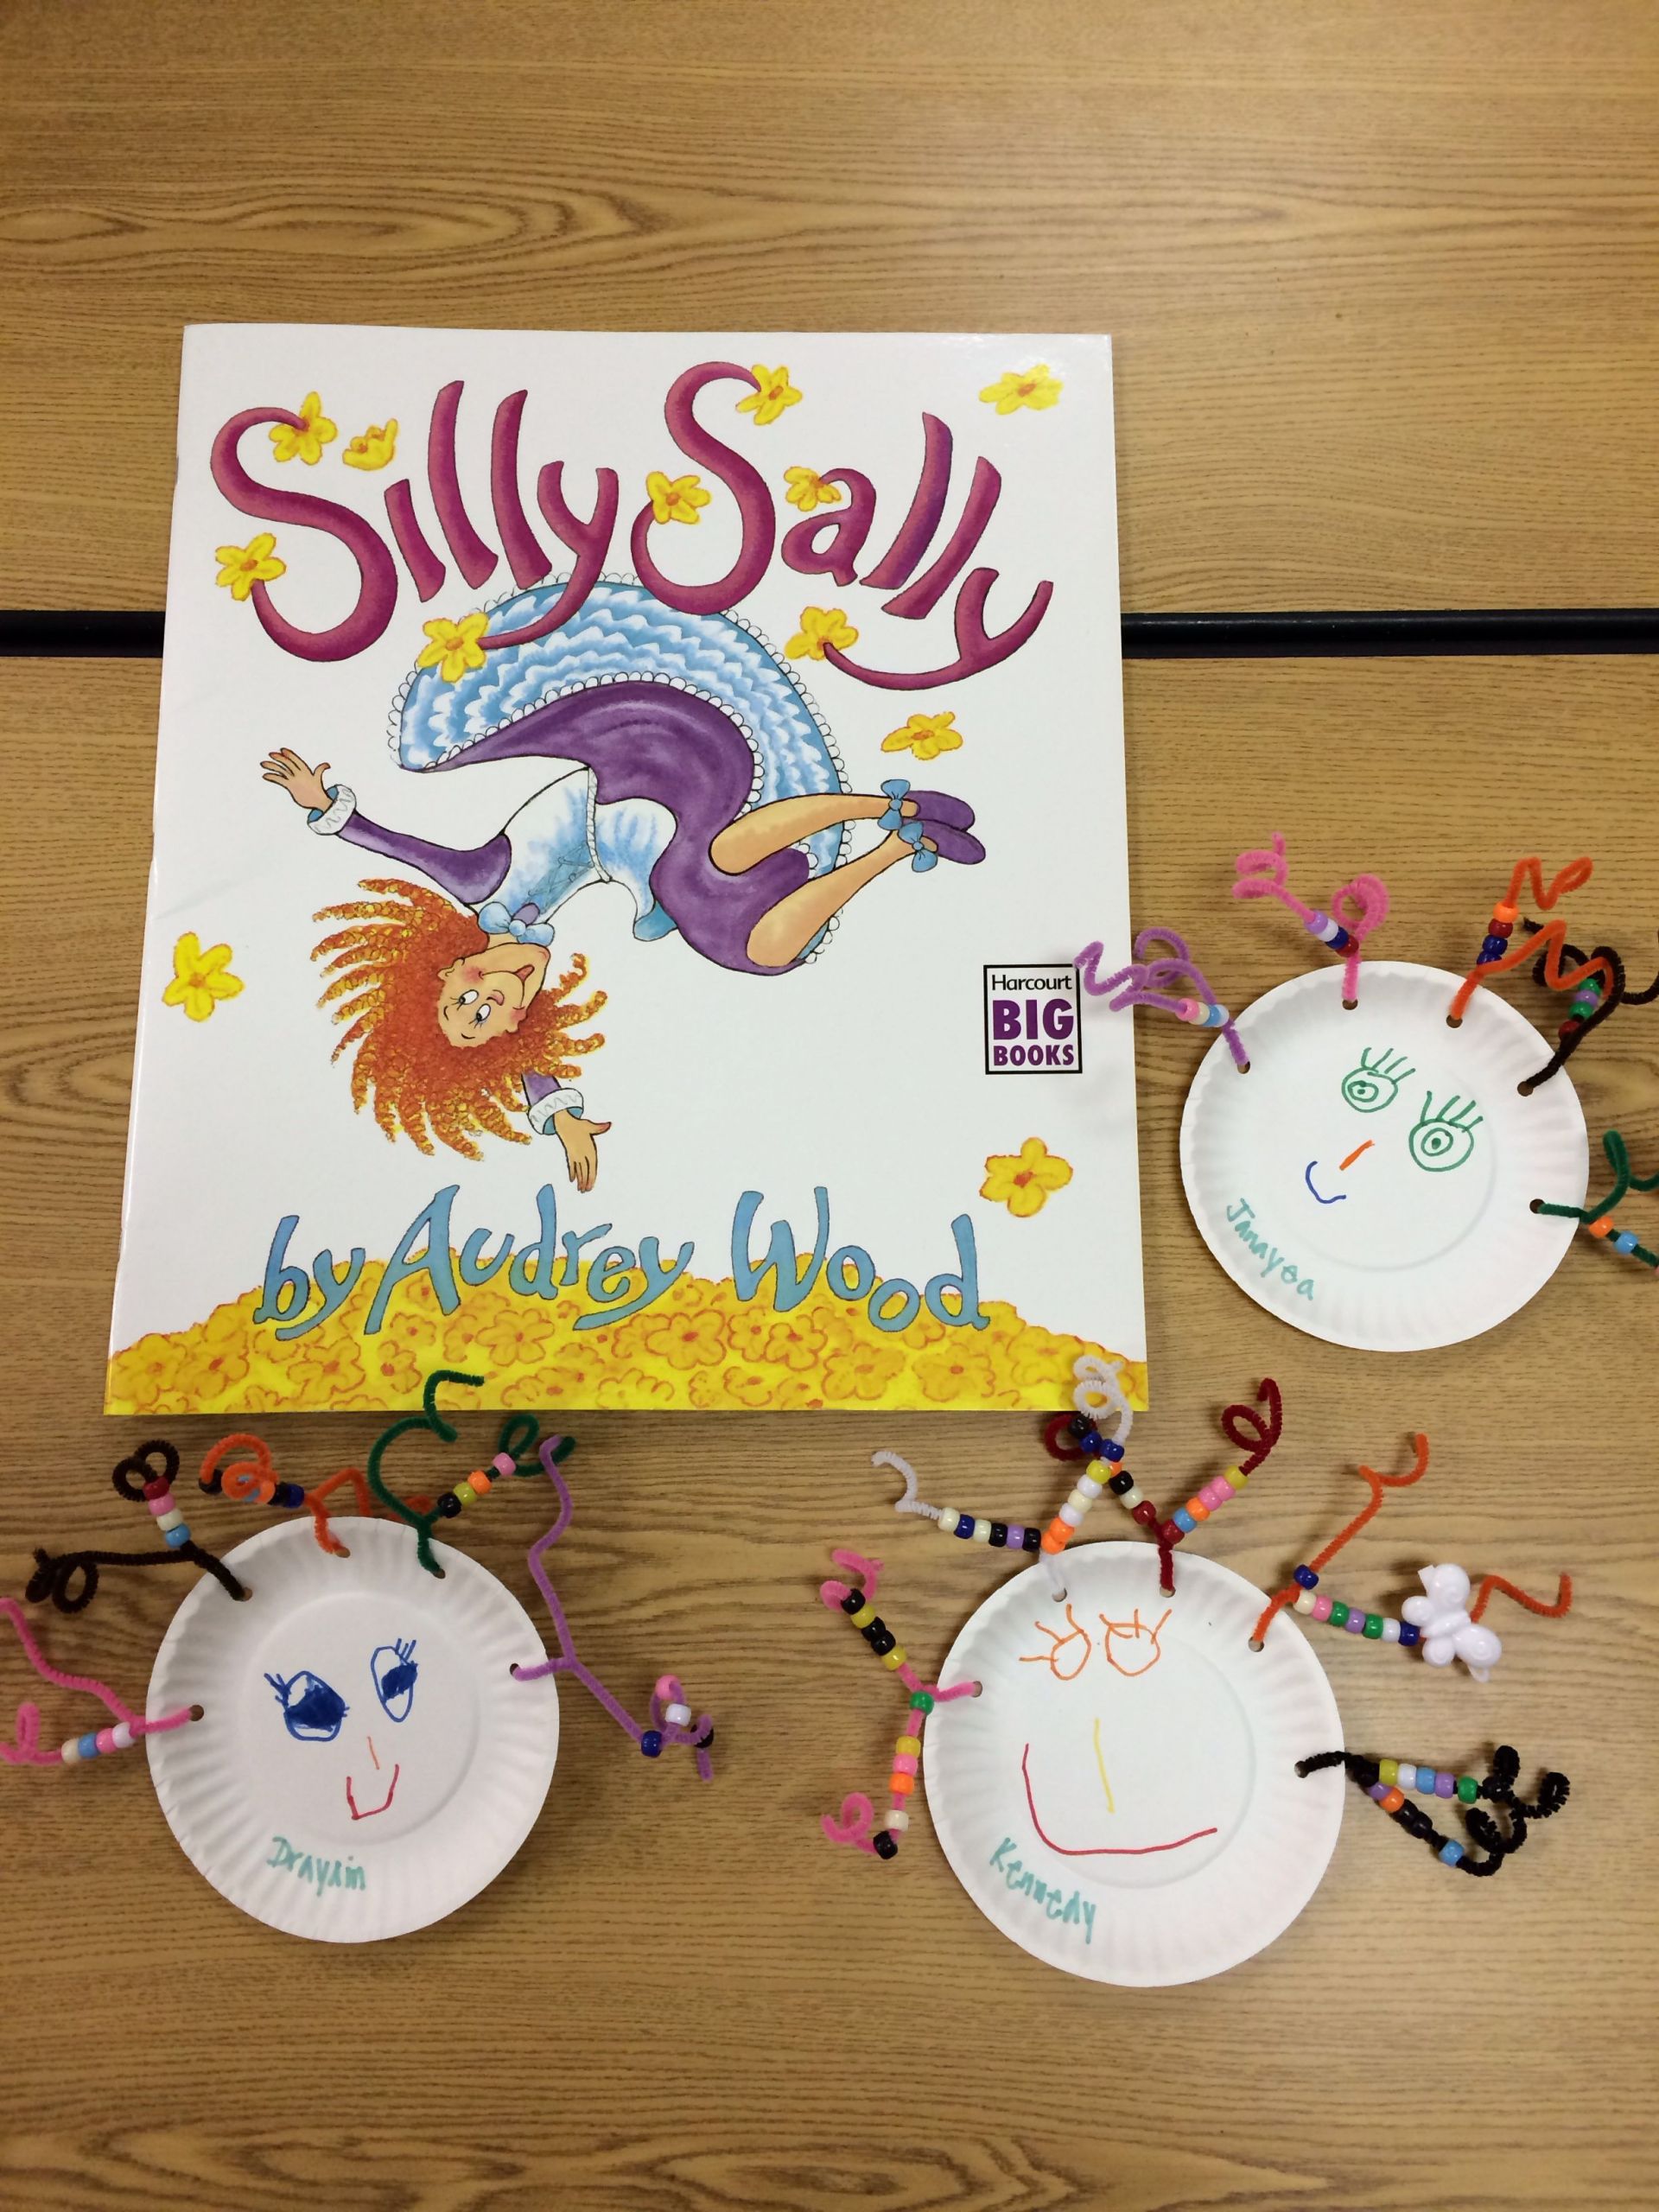 Preschool Crafts Ideas
 Silly Sally preschool art project